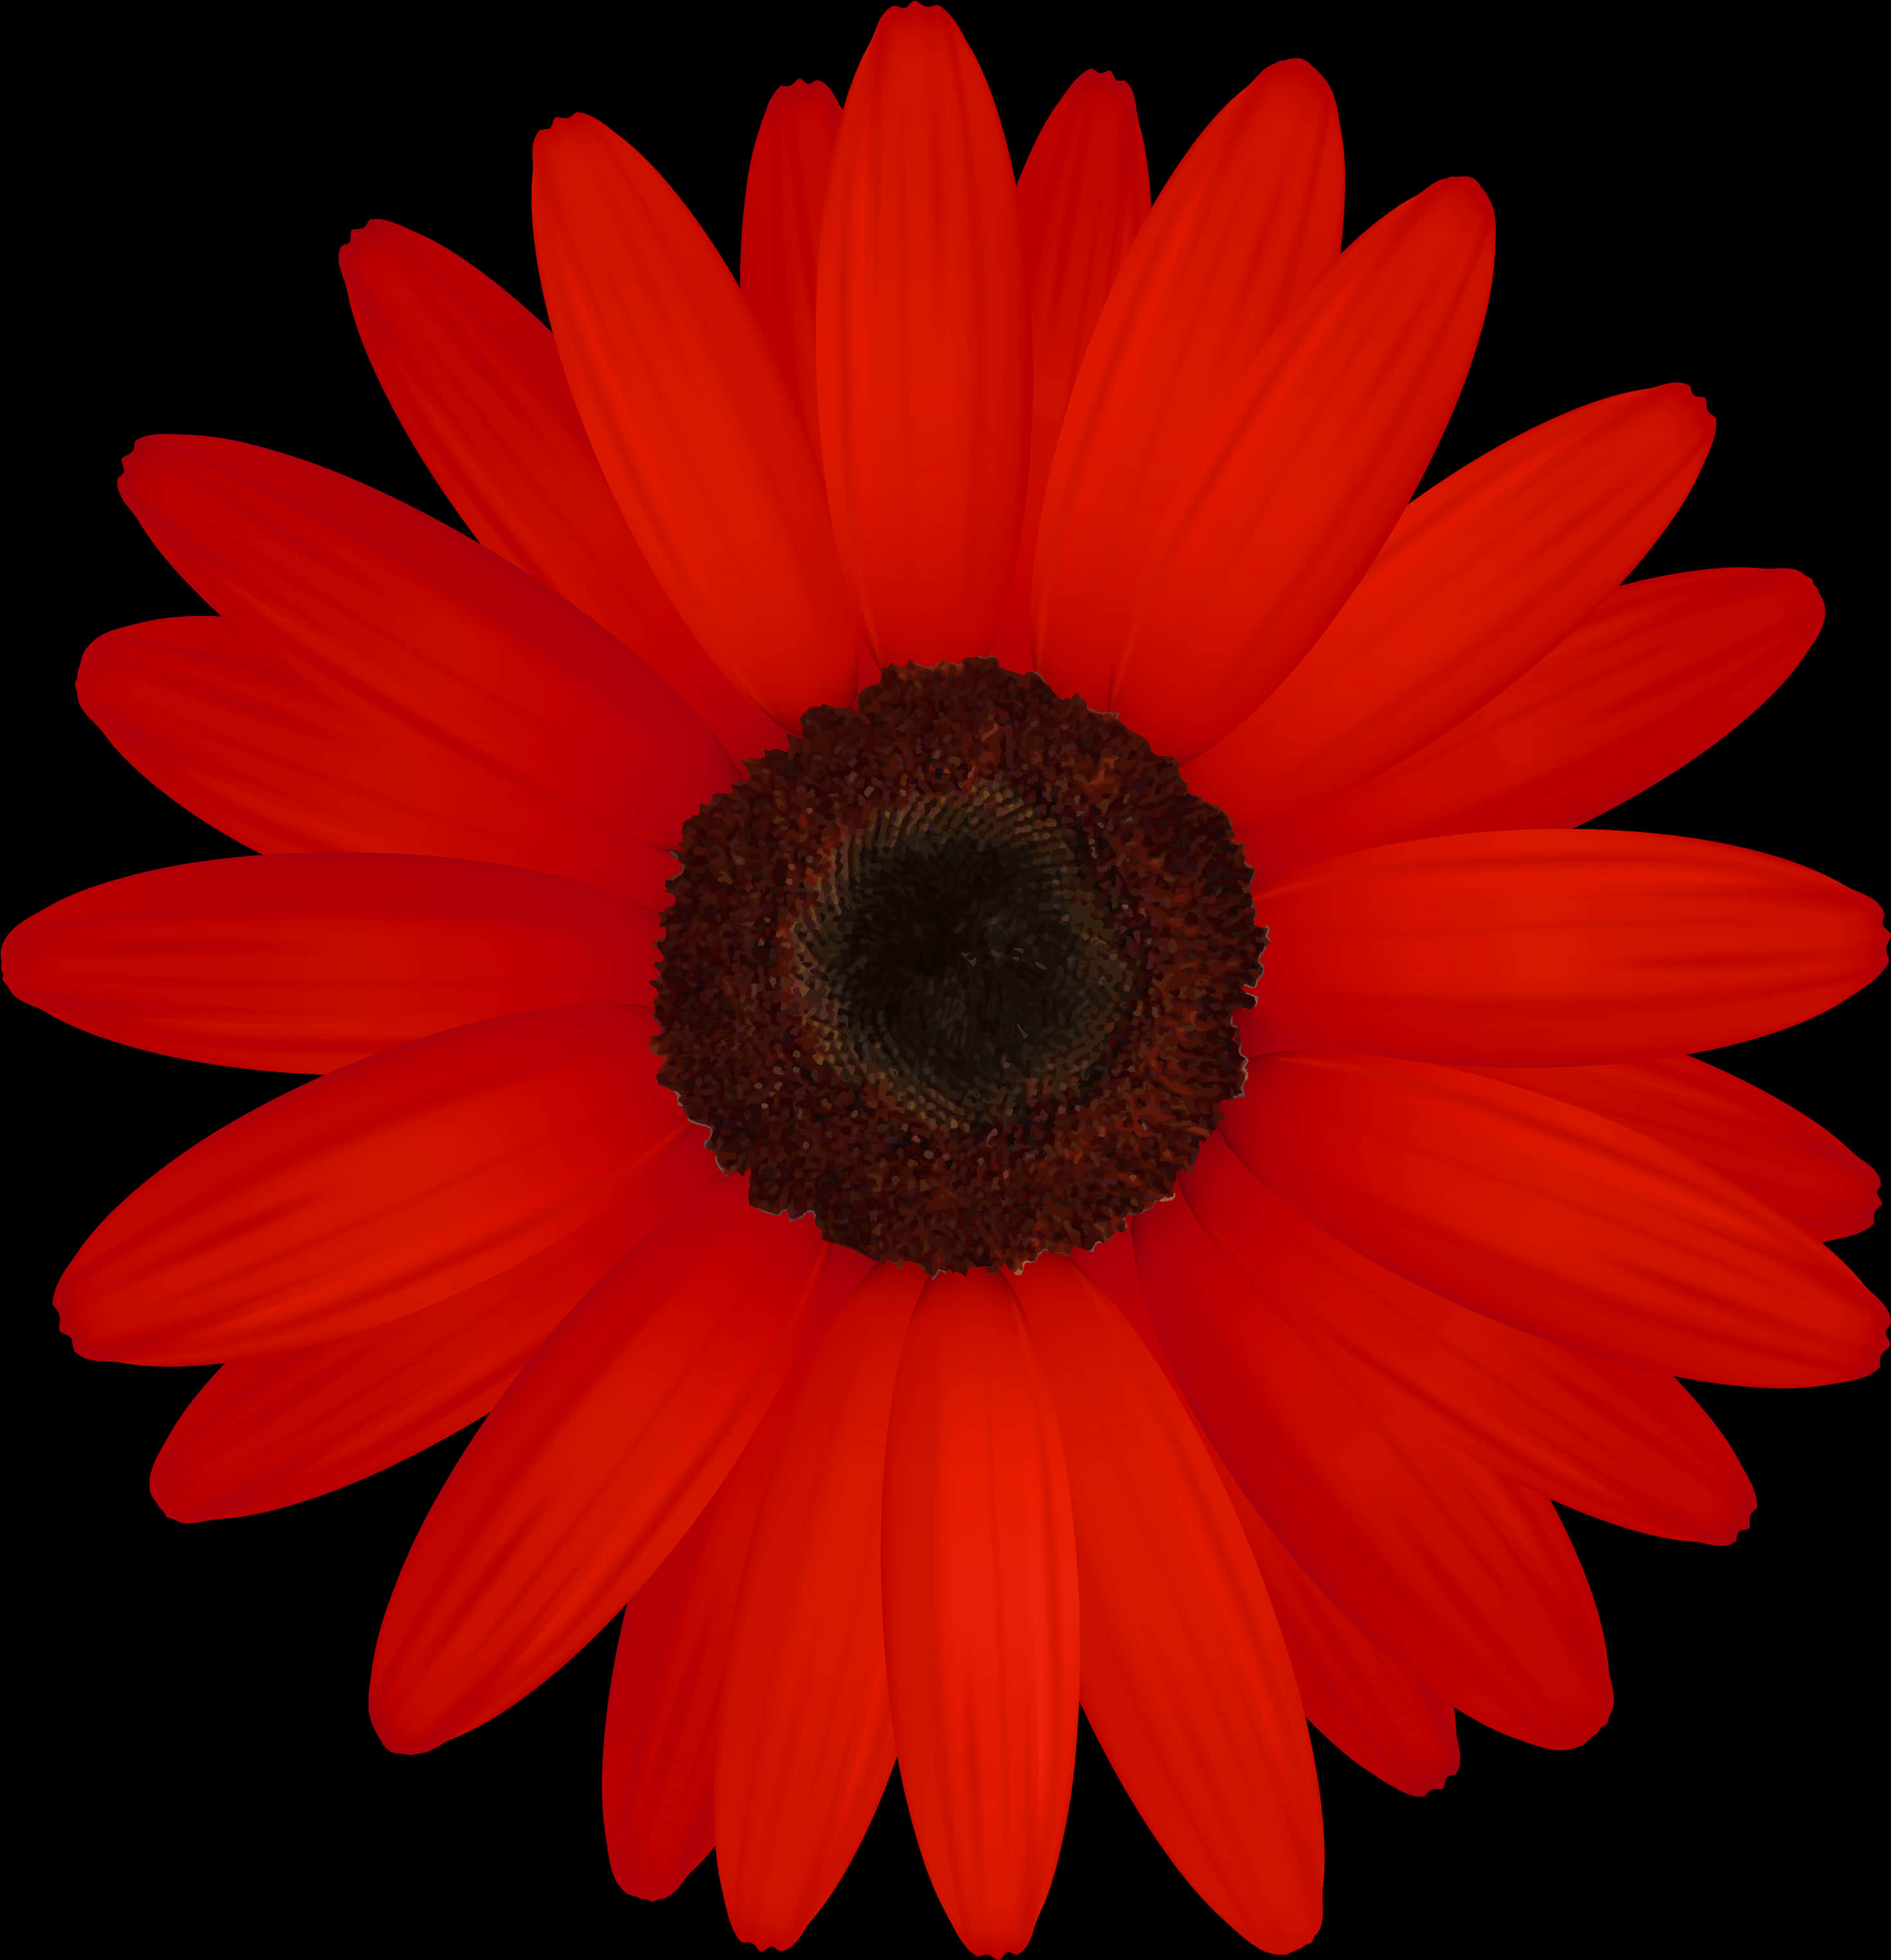 Vibrant Red Daisy Black Background.jpg